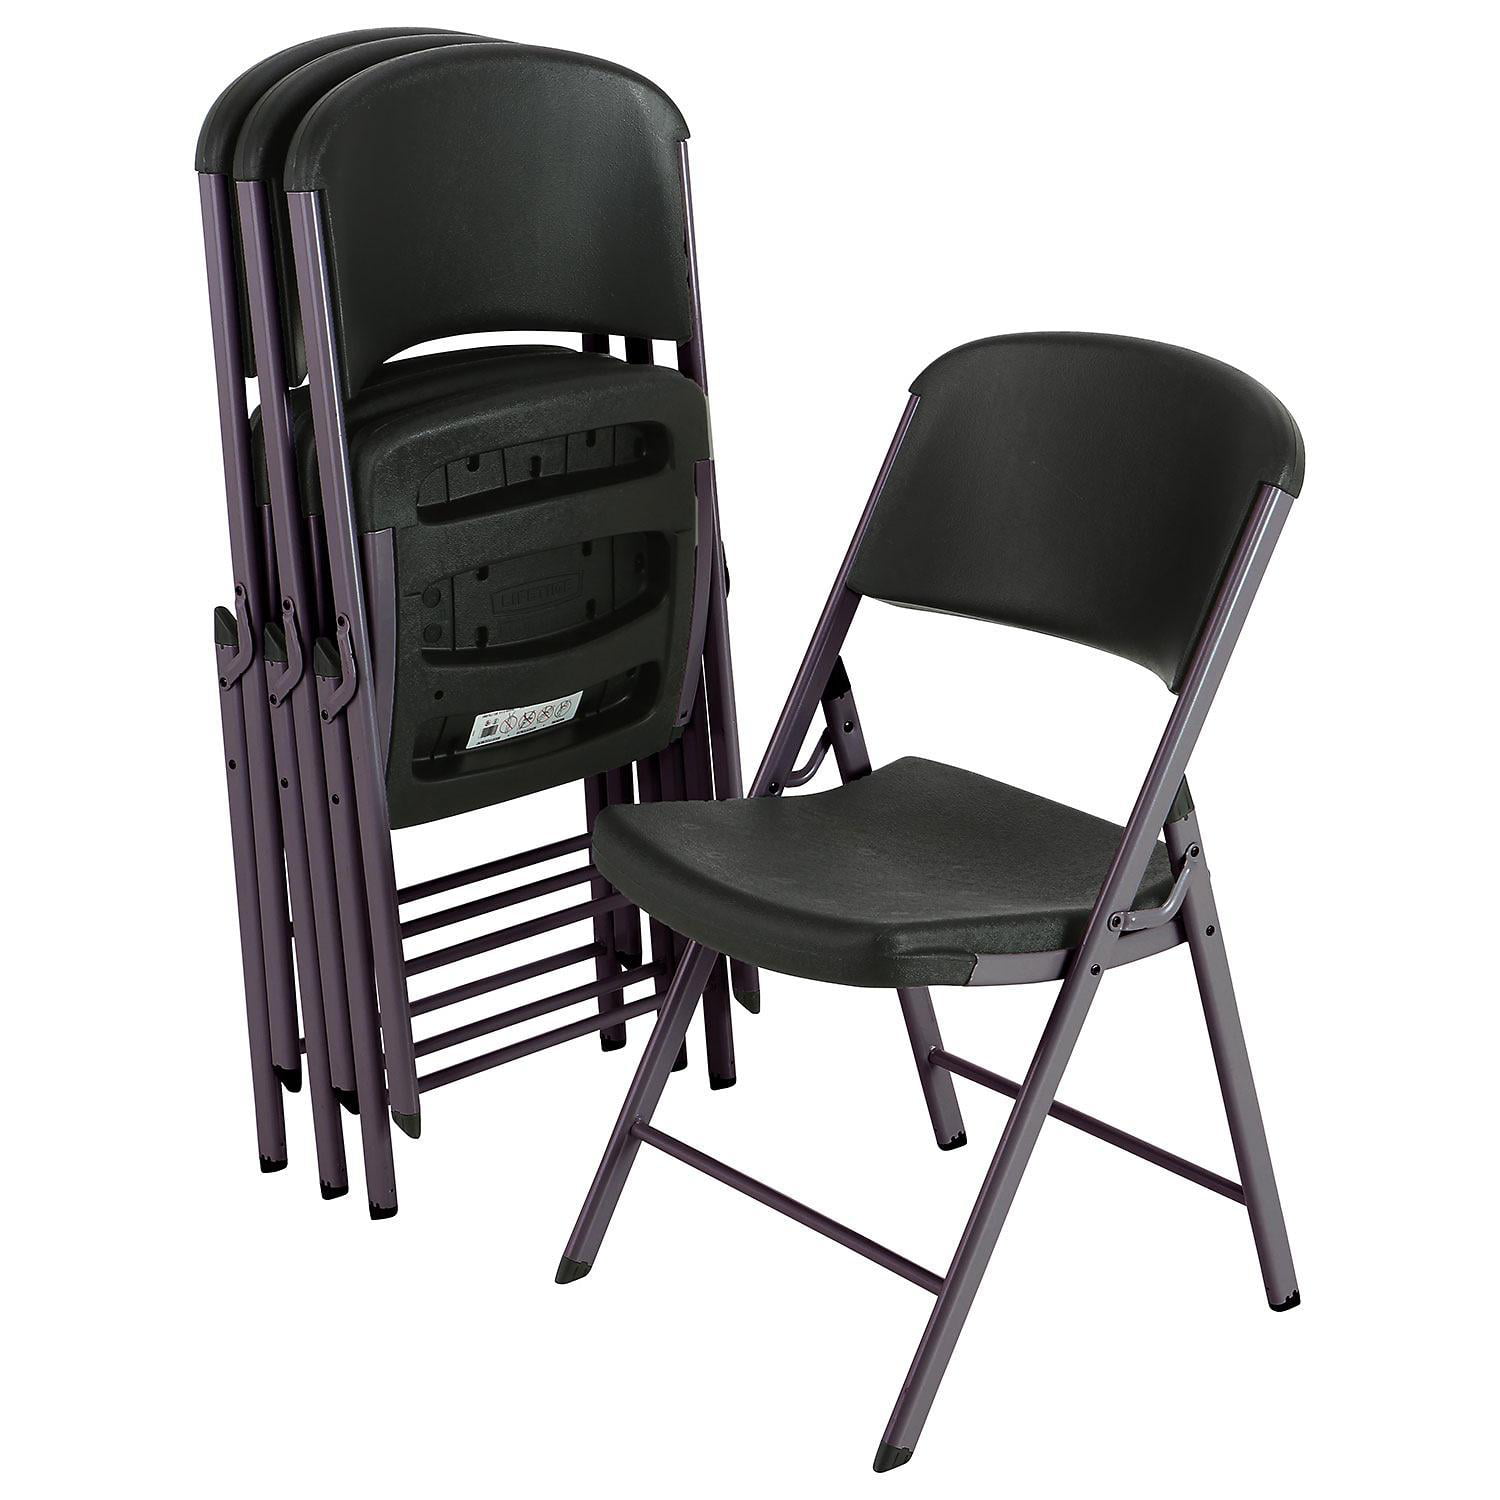 Lifetime Commercial Grade Contoured Folding Chair, 4 Pack